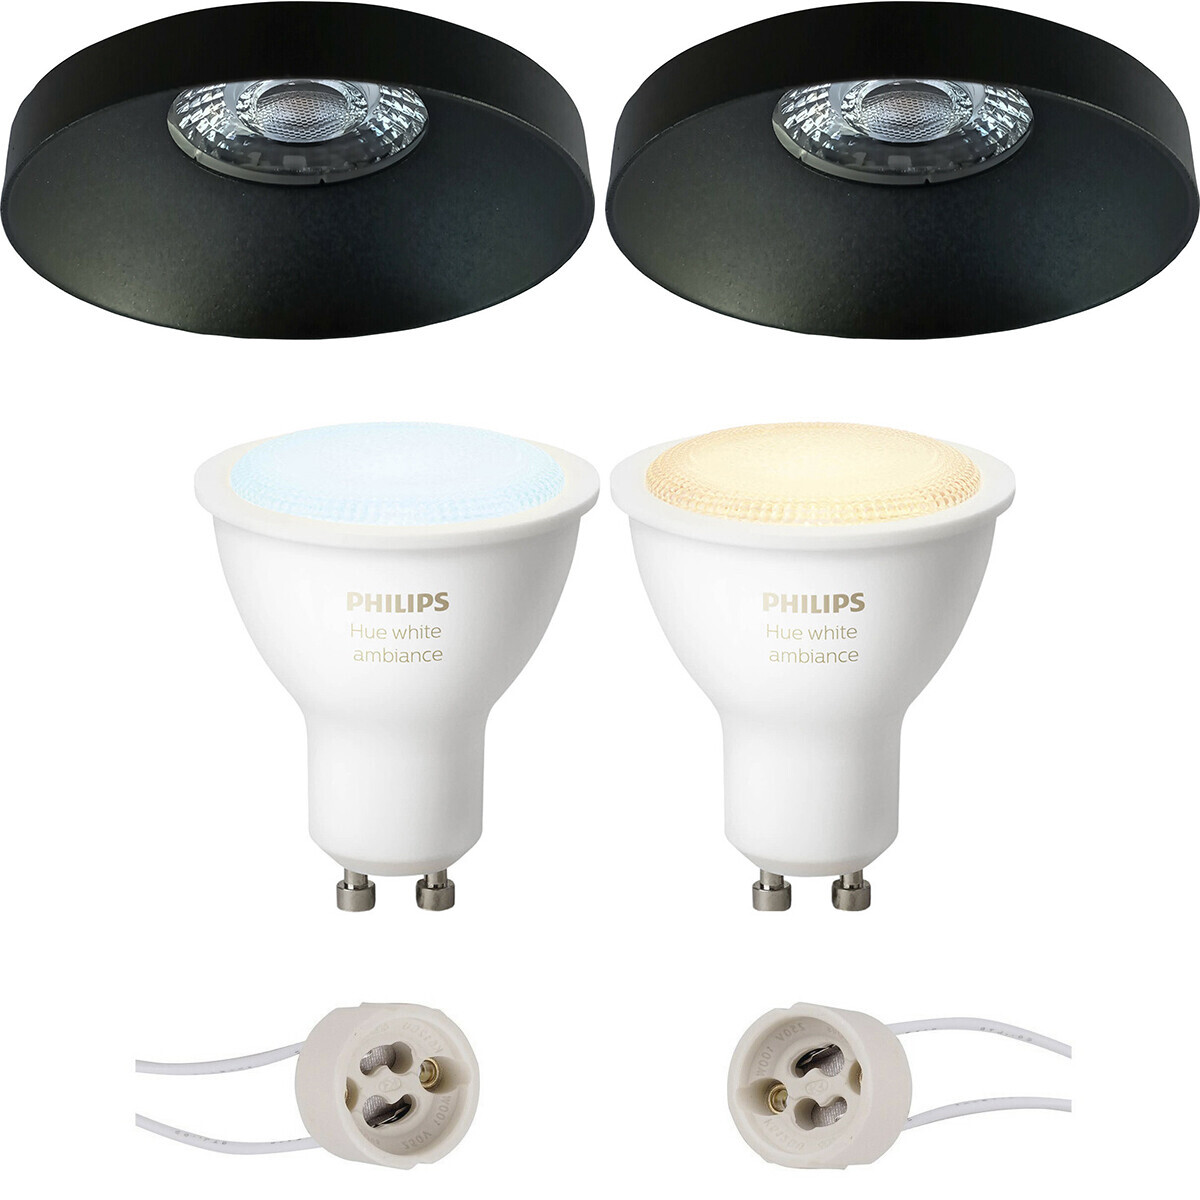 BES LED Pragmi Vrito Pro - Inbouw Rond - Mat Zwart - Ø82mm - Philips Hue - LED Spot Set GU10 - White Ambiance - Bluetooth